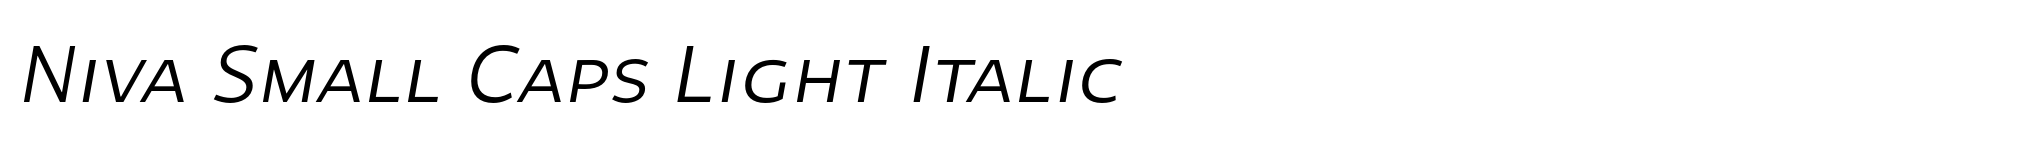 Niva Small Caps Light Italic image